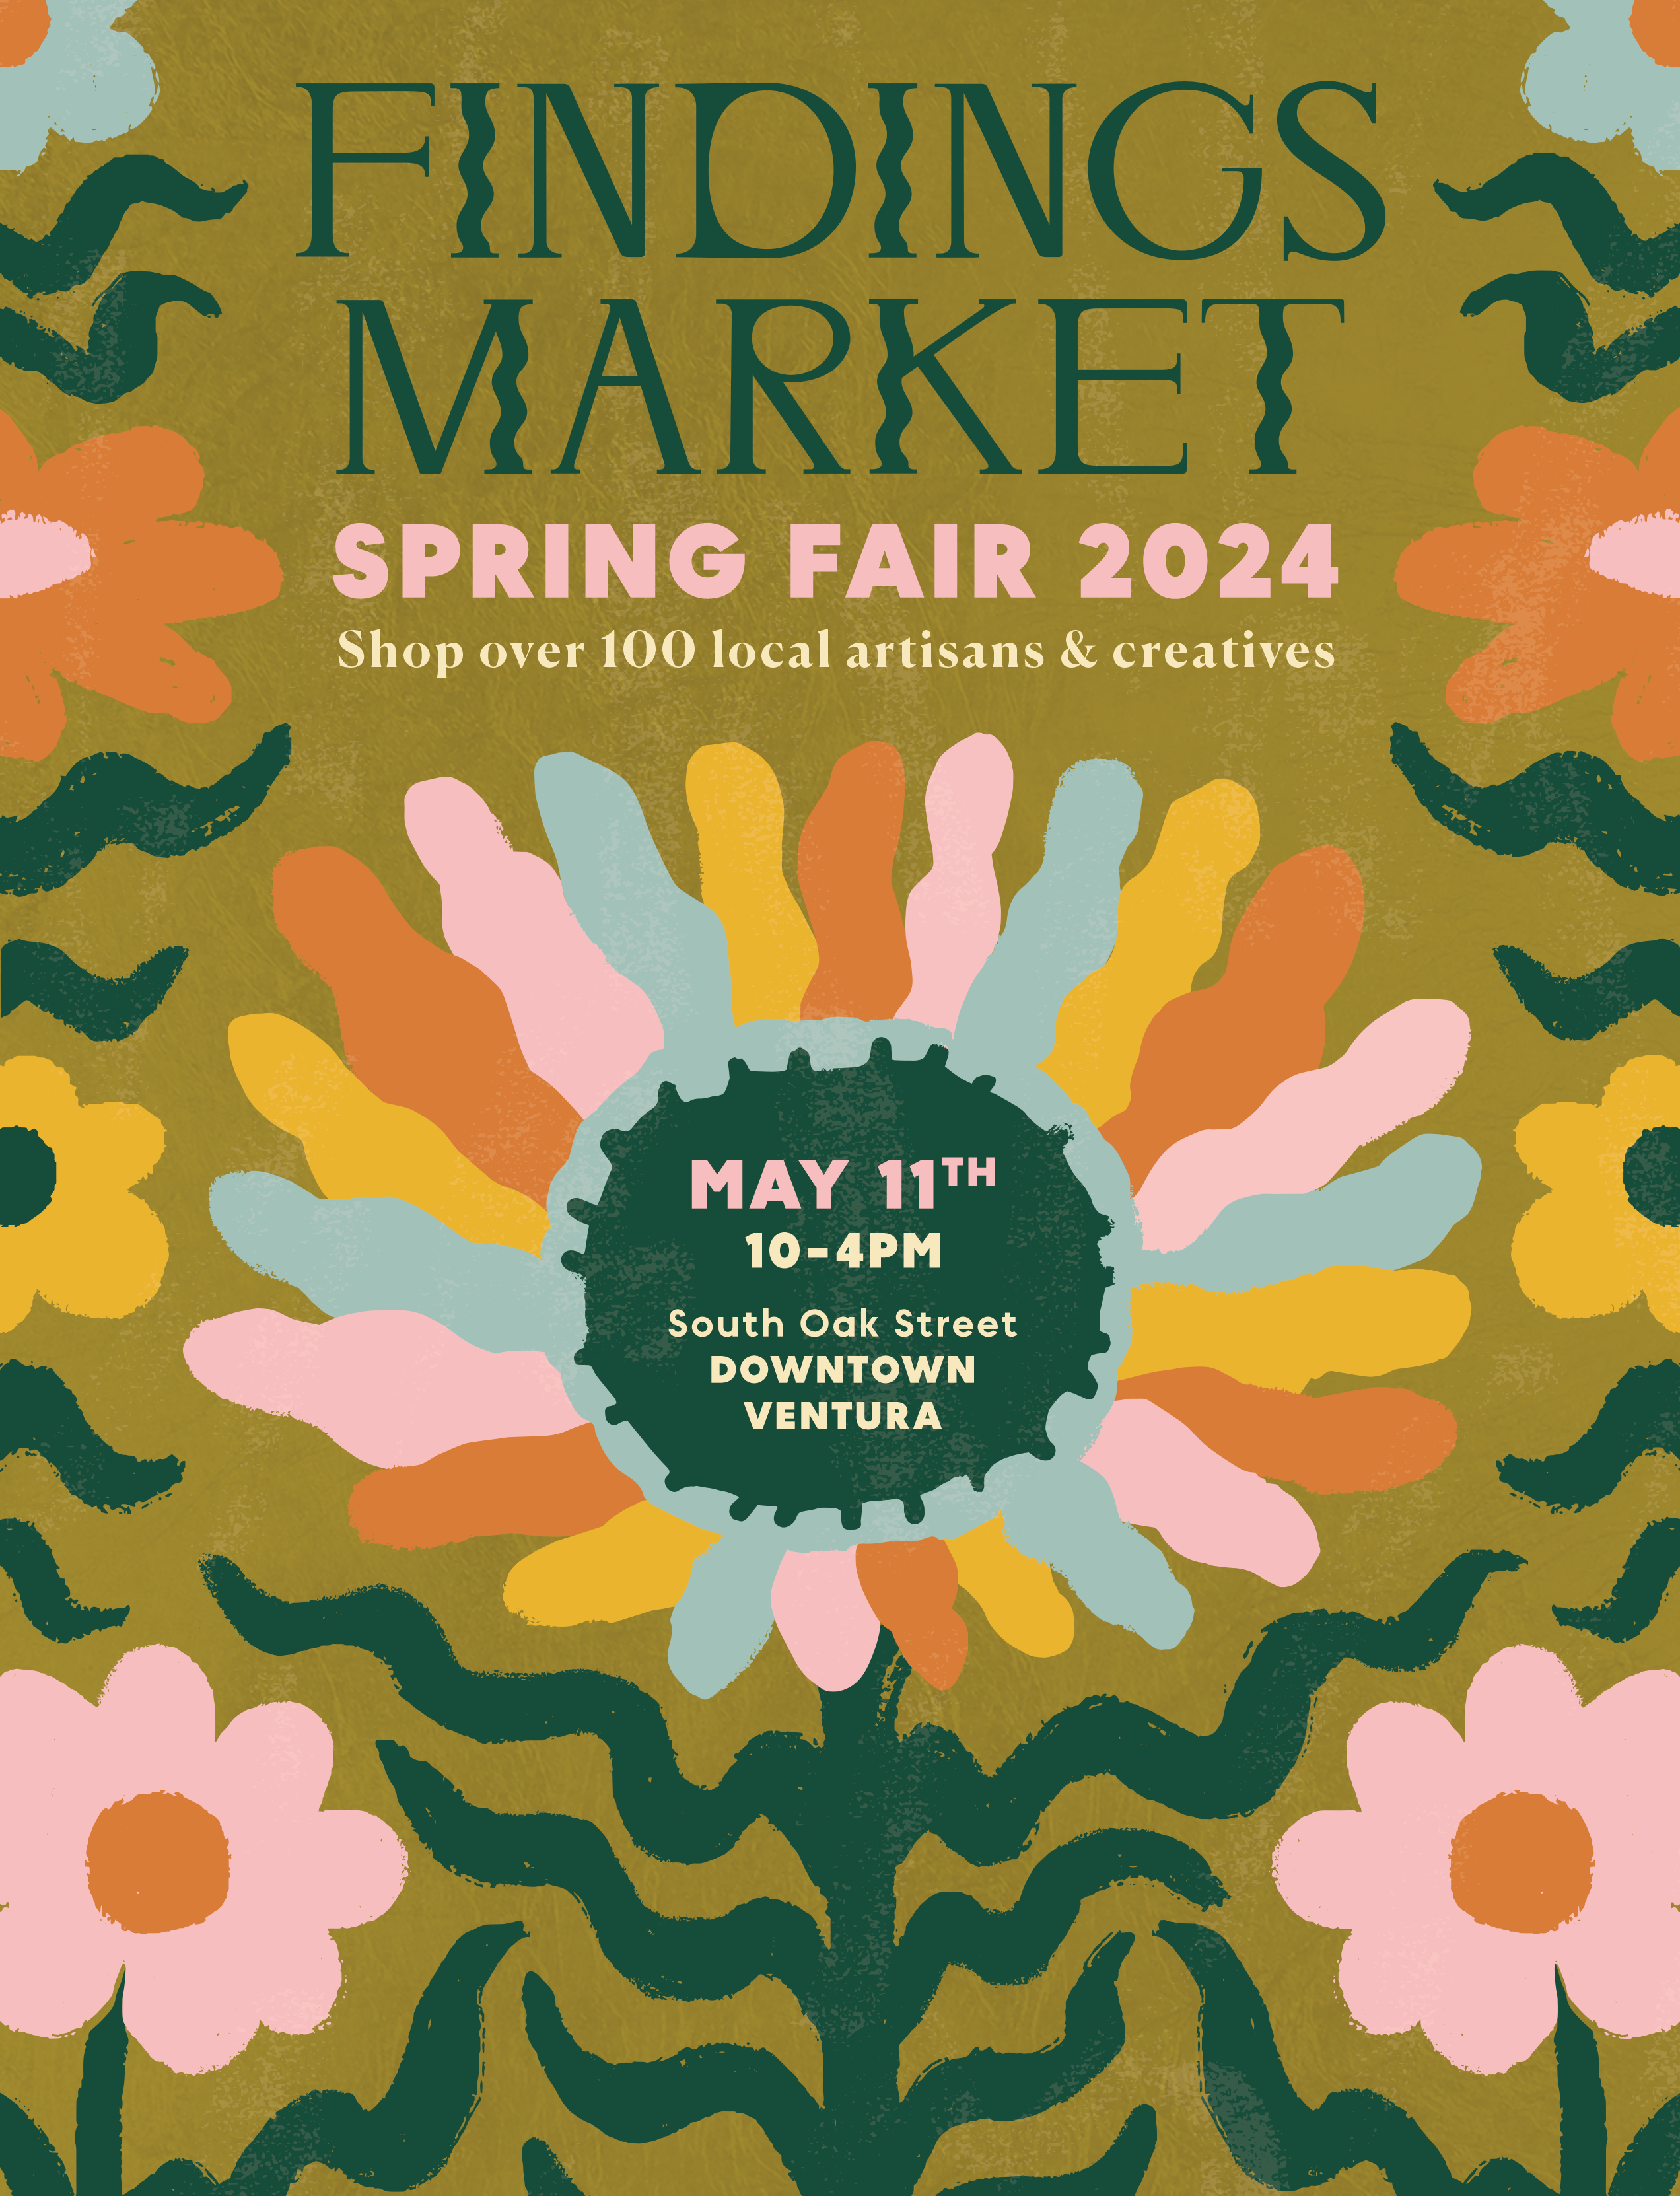 craft fair makers market ventura spring fair findings market